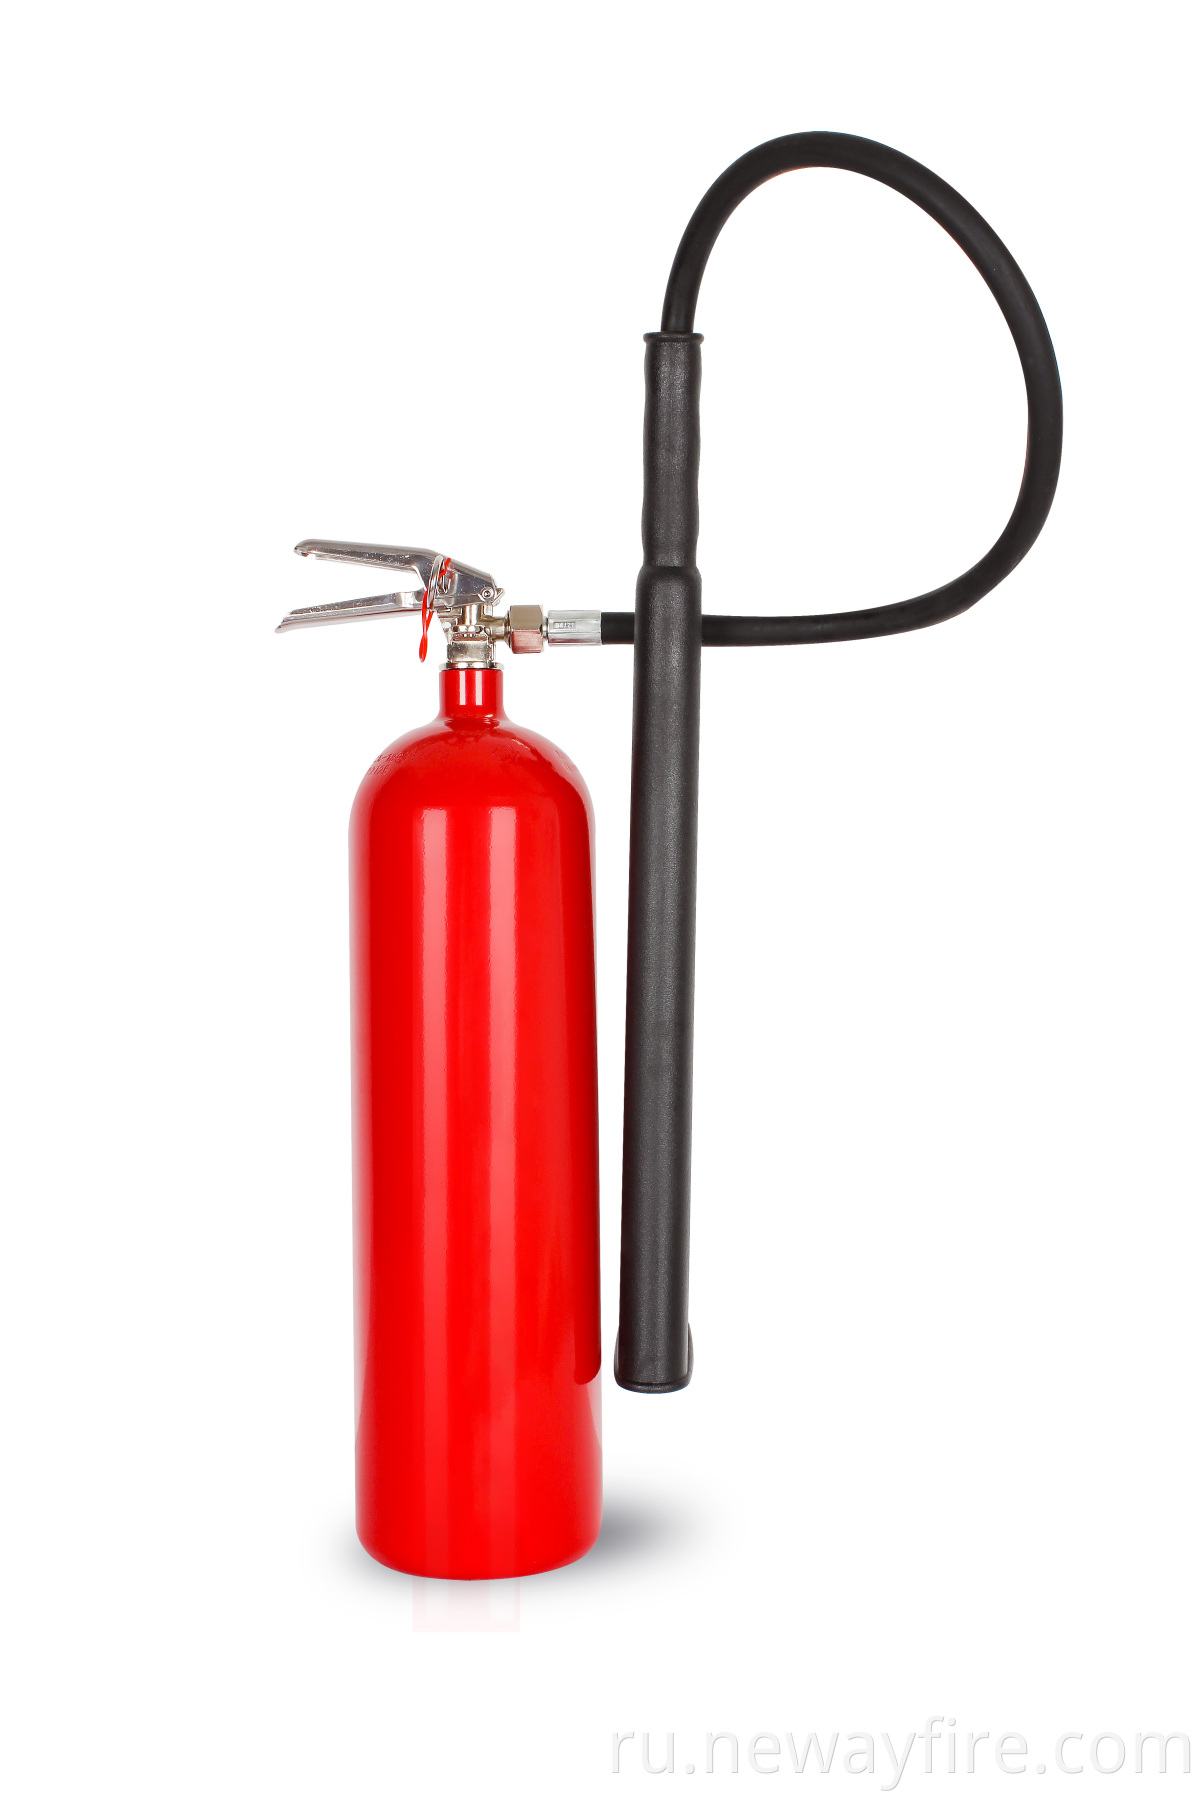 2Kg Alloy Steel Co2 Fire Extinguisher